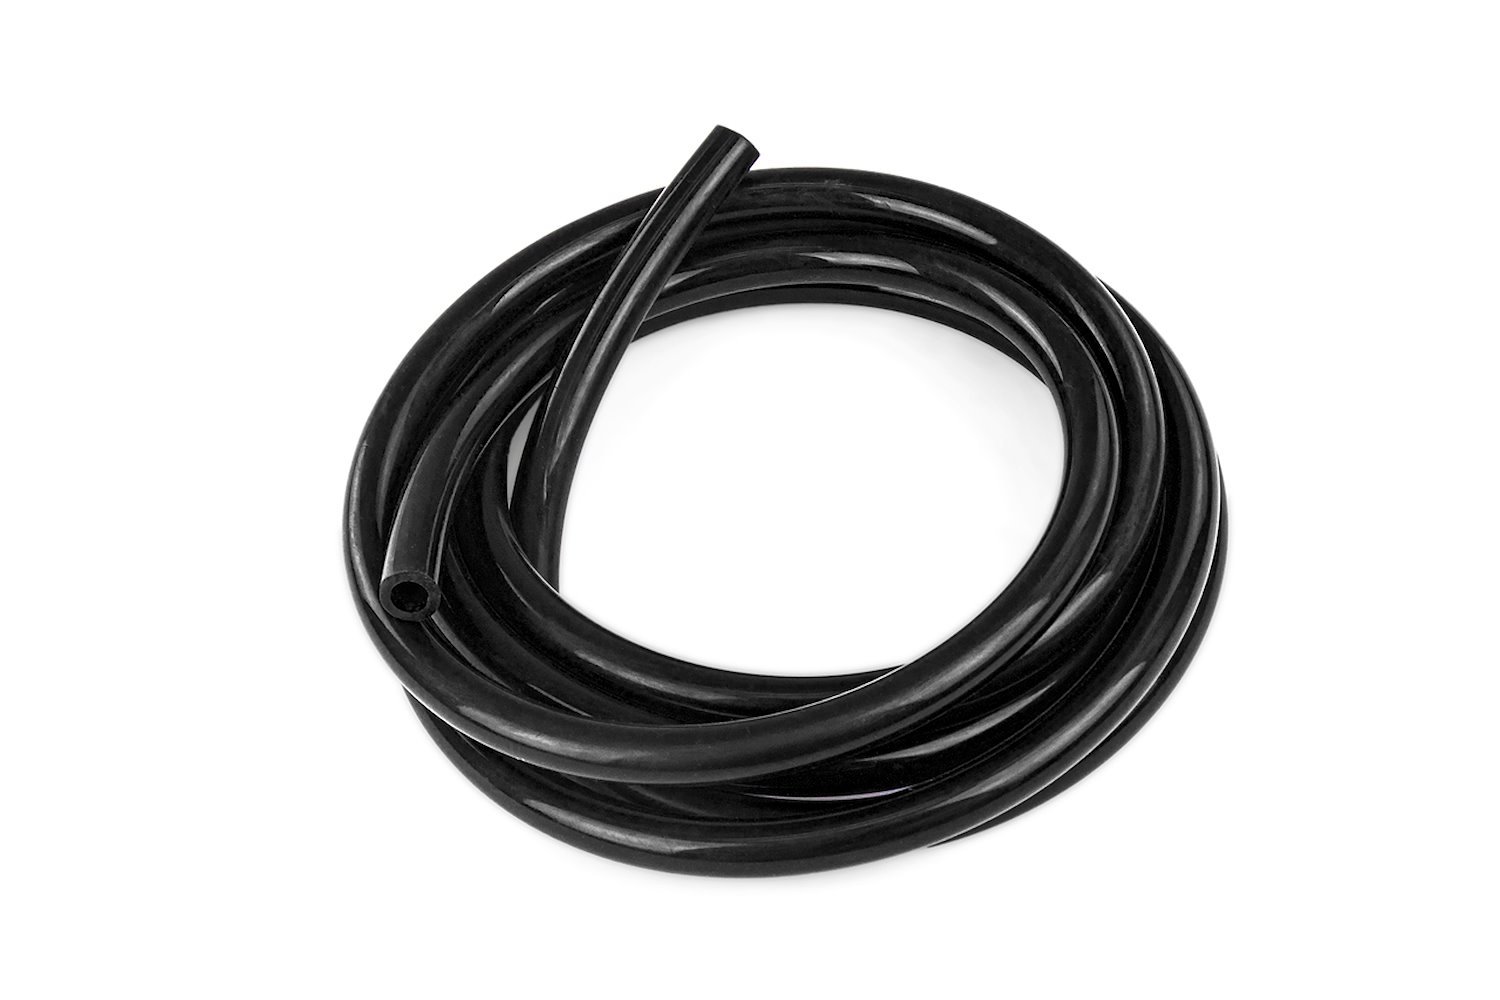 HTSVH3-BLKx10 High-Temperature Silicone Vacuum Hose Tubing, 1/8 in. ID, 10 ft. Roll, Black